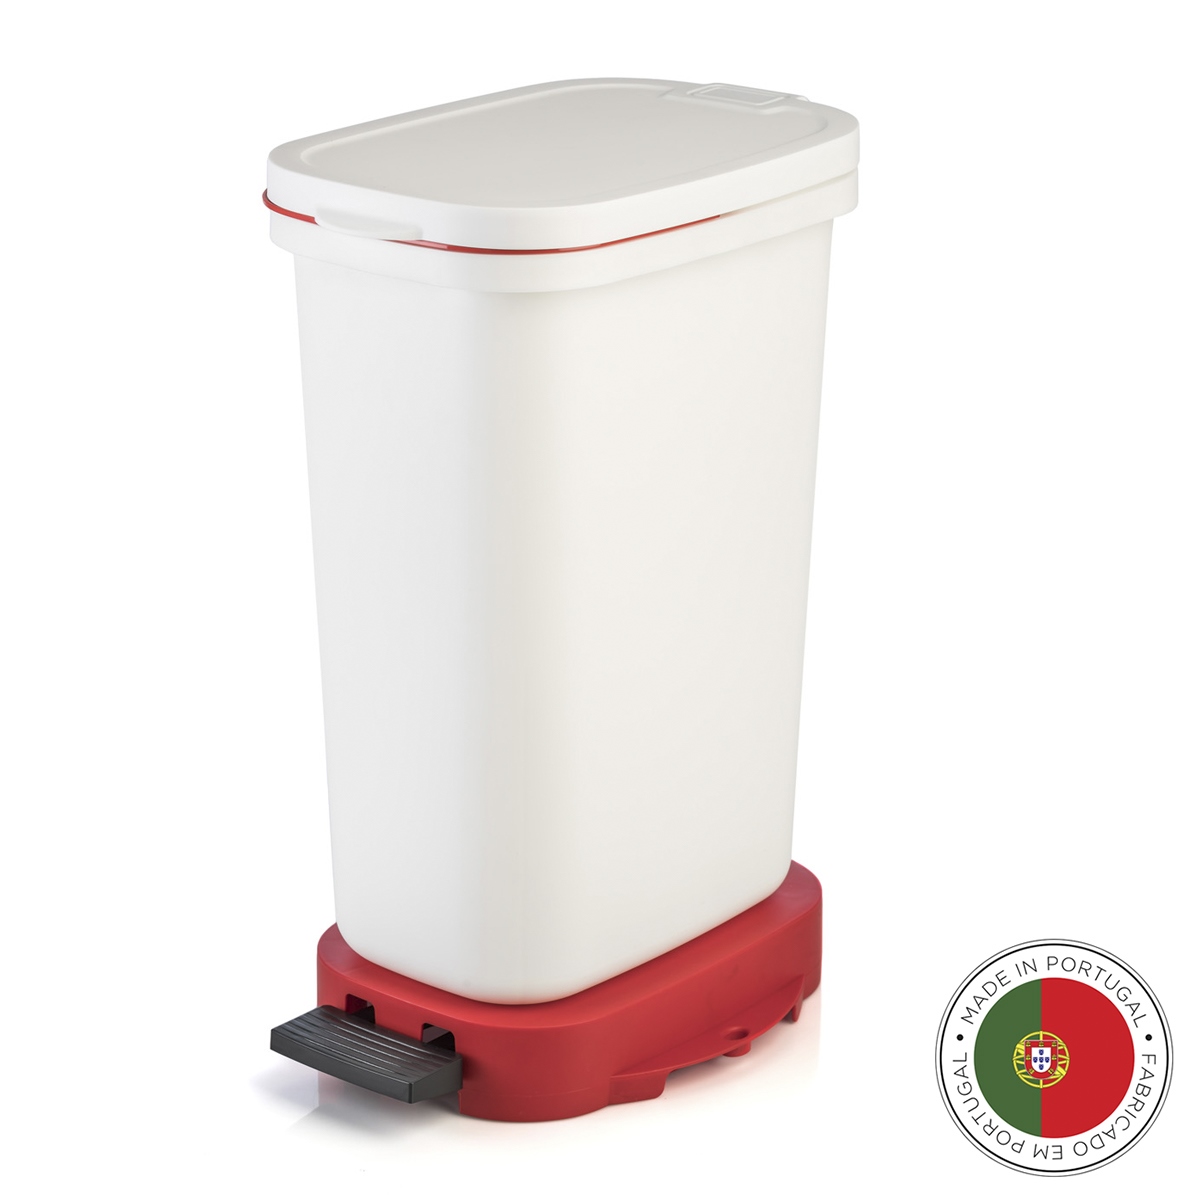 Мусорный бак с педалью BE-ECO white red, 26х36 см, 50 см, 20 л, Пластик, Faplana, Португалия